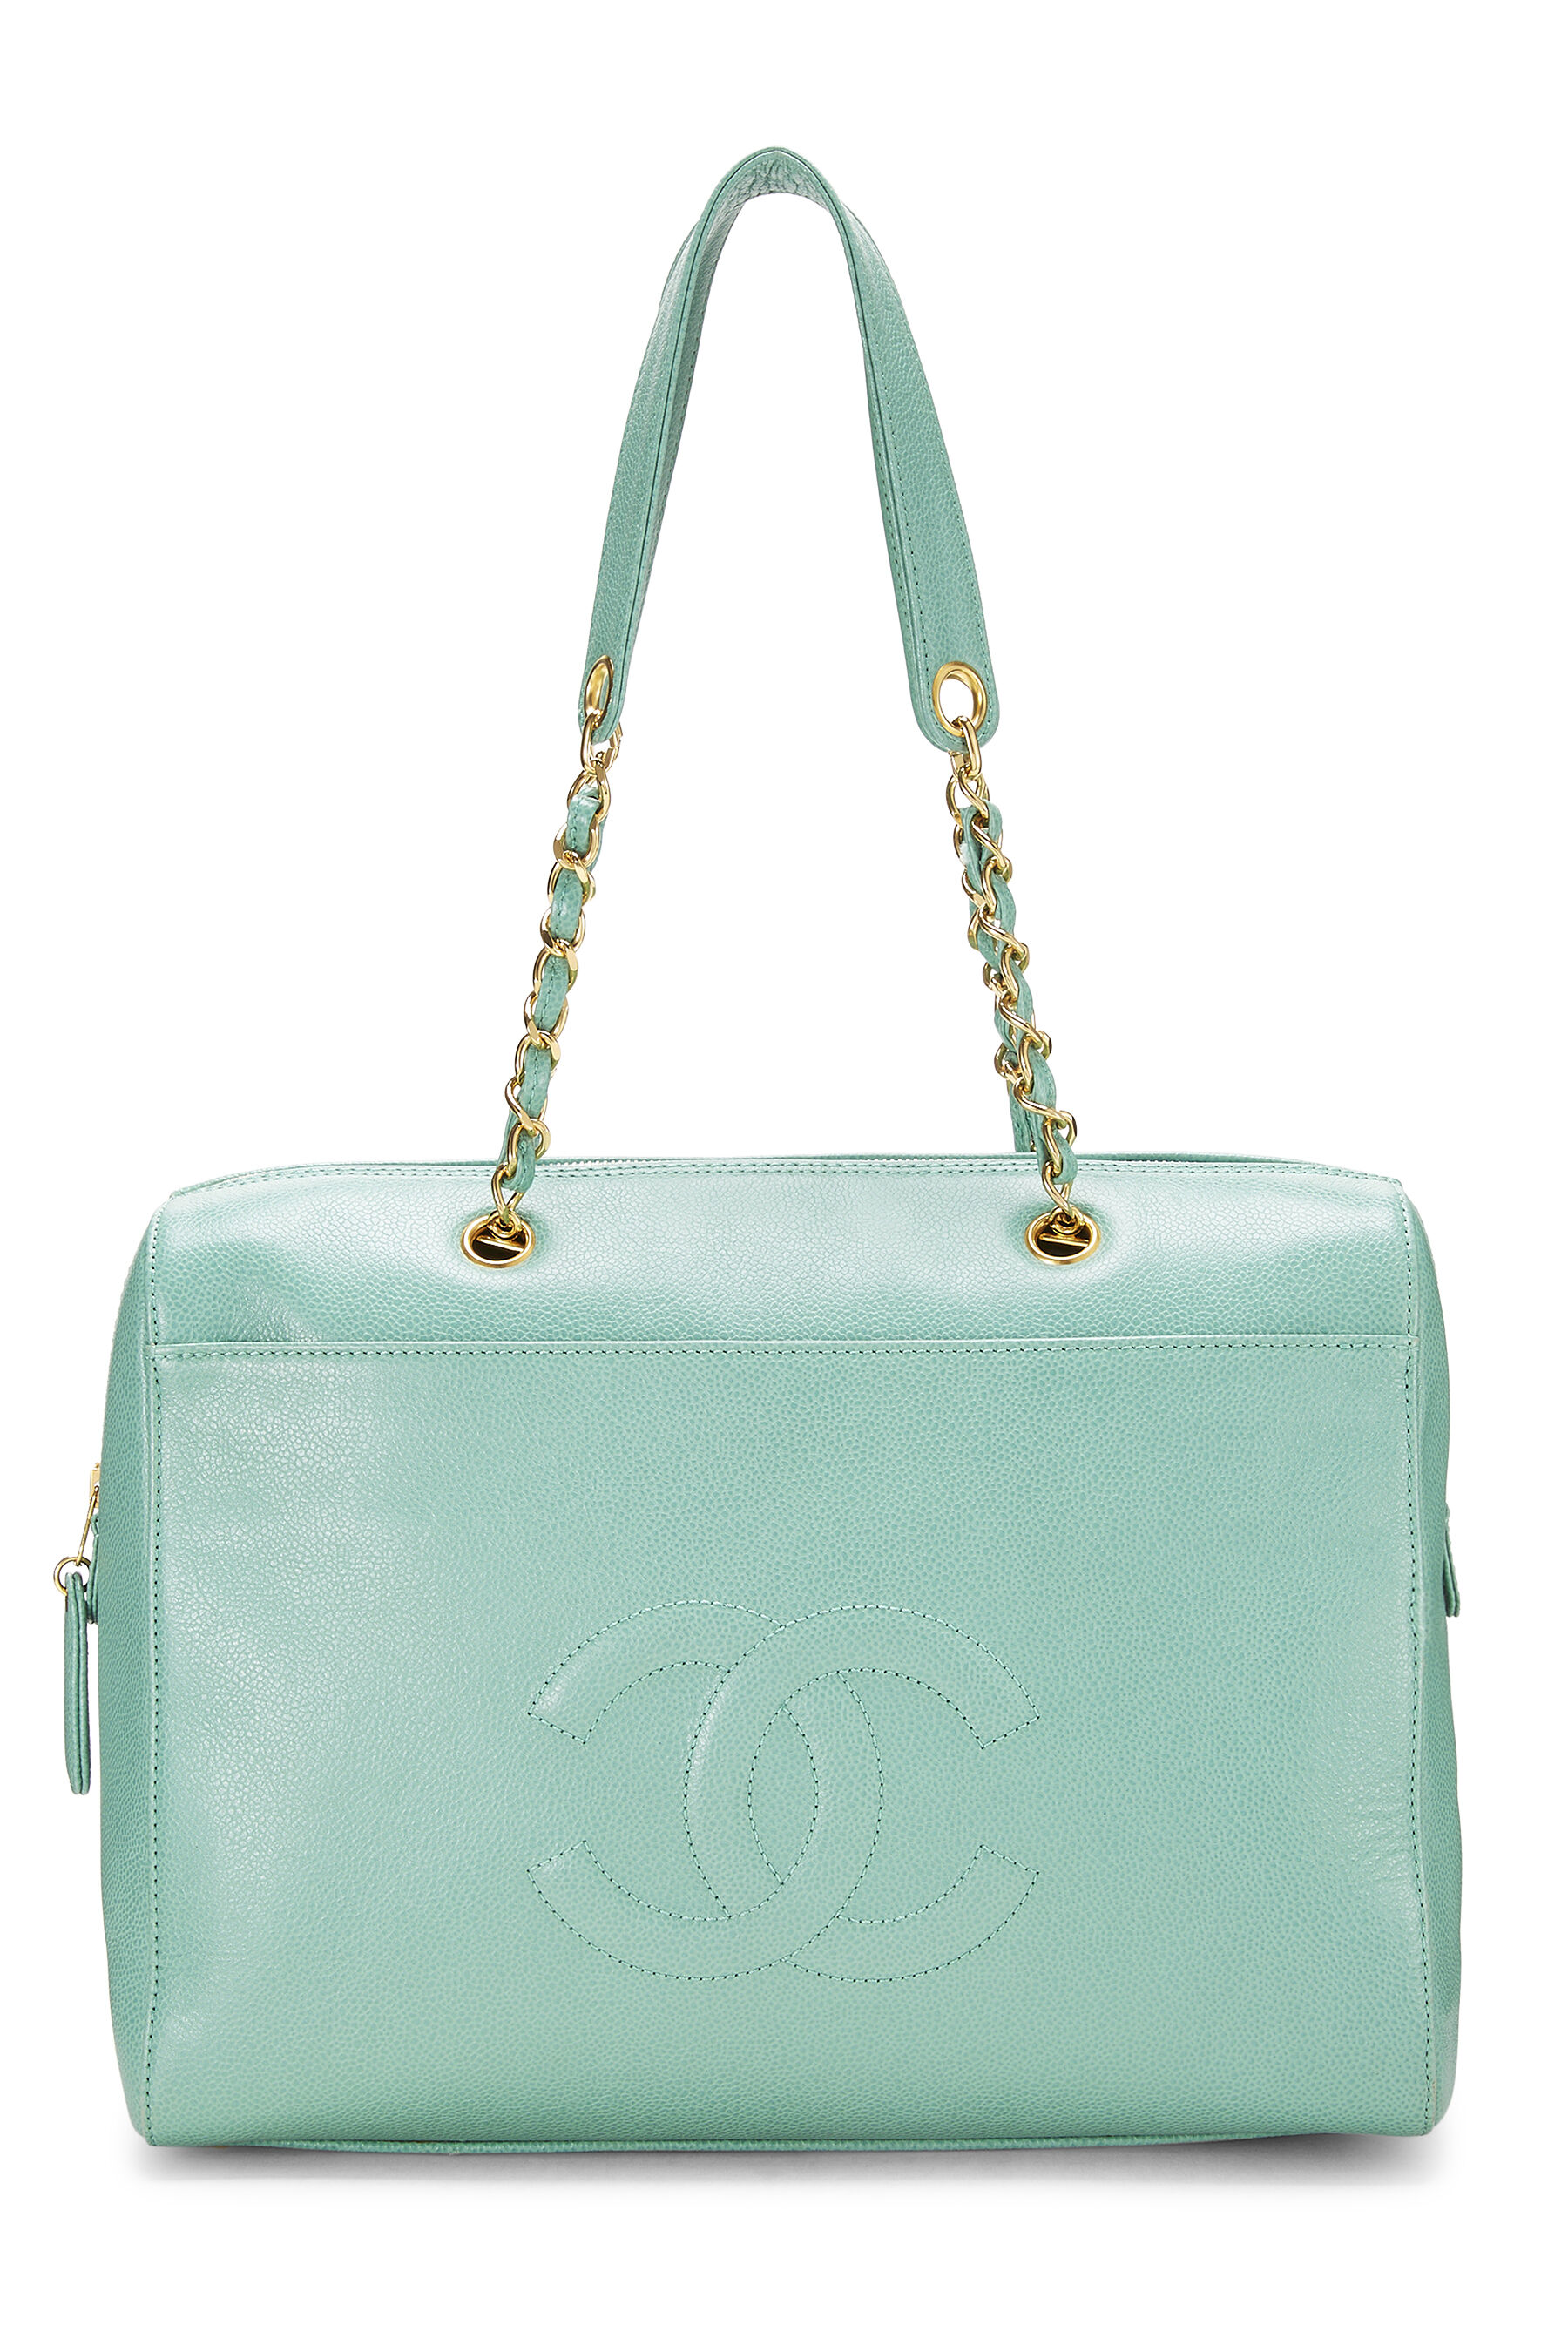 Chanel Grained Calfskin Large Chain Shoulder Bag W Flap SV Classic L06